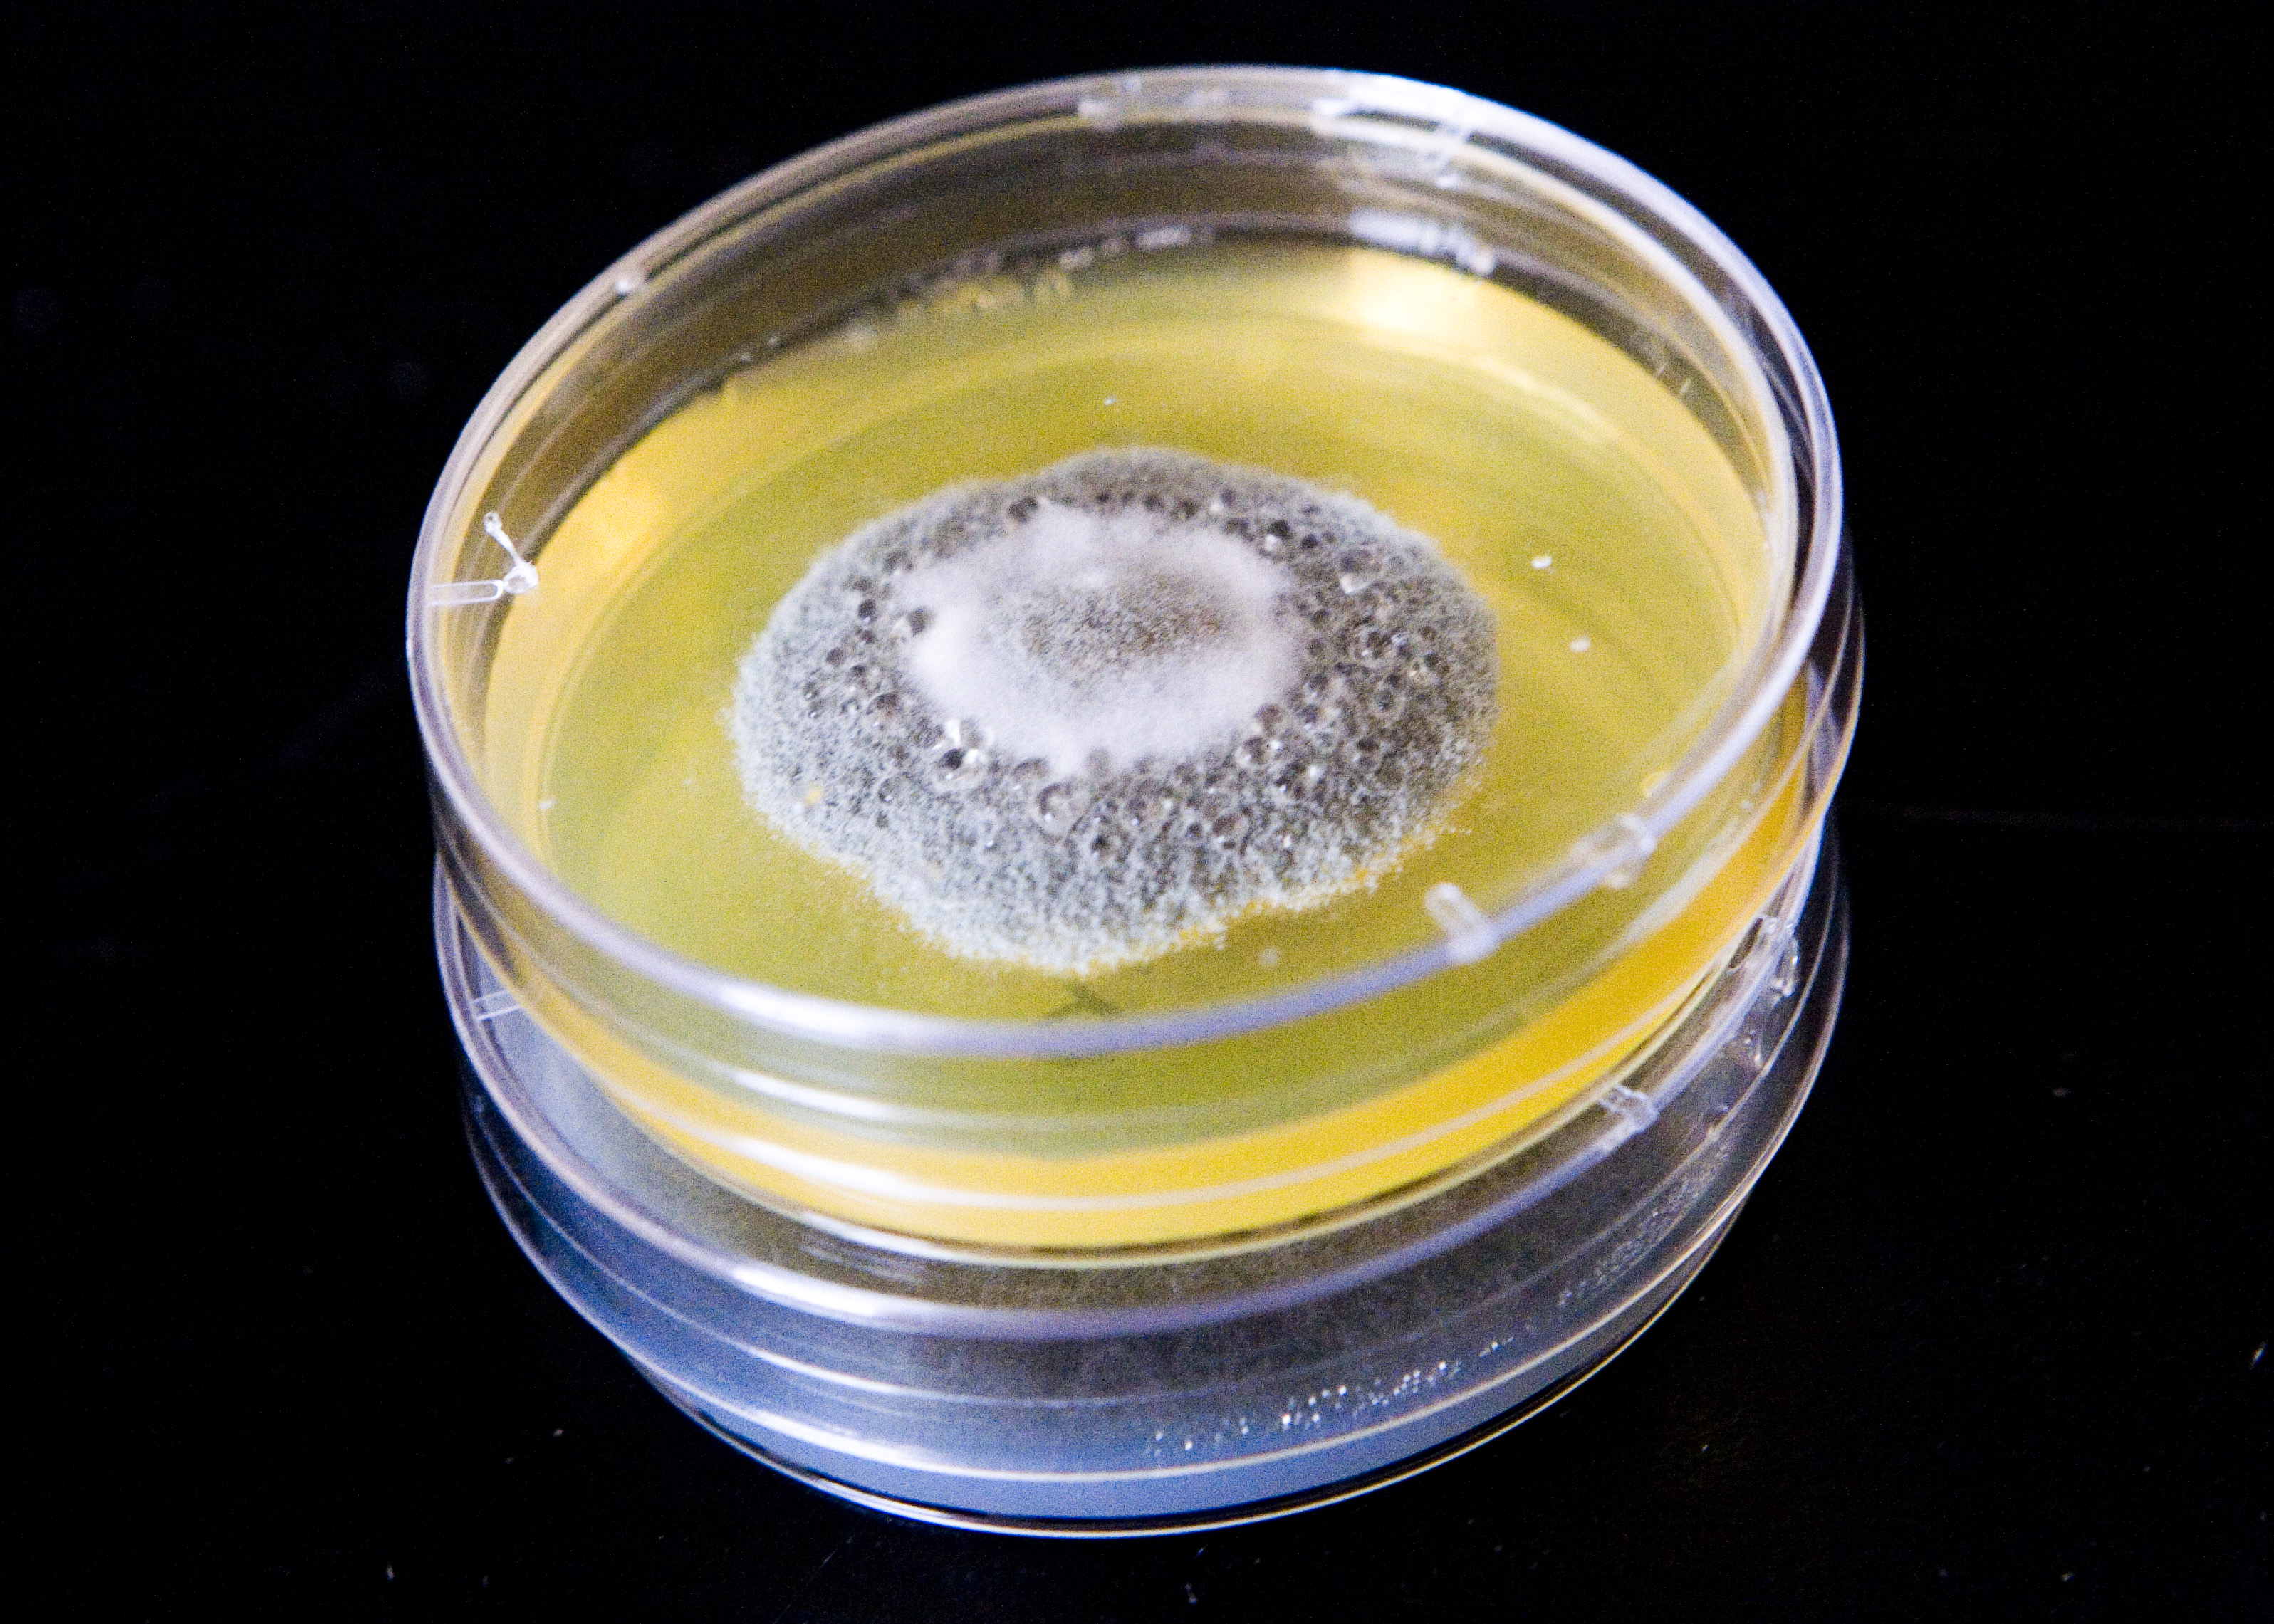 Penicillium swiecickii 182 6C1 grown on an agar plate. Image by Adriana Romero-Olivares.